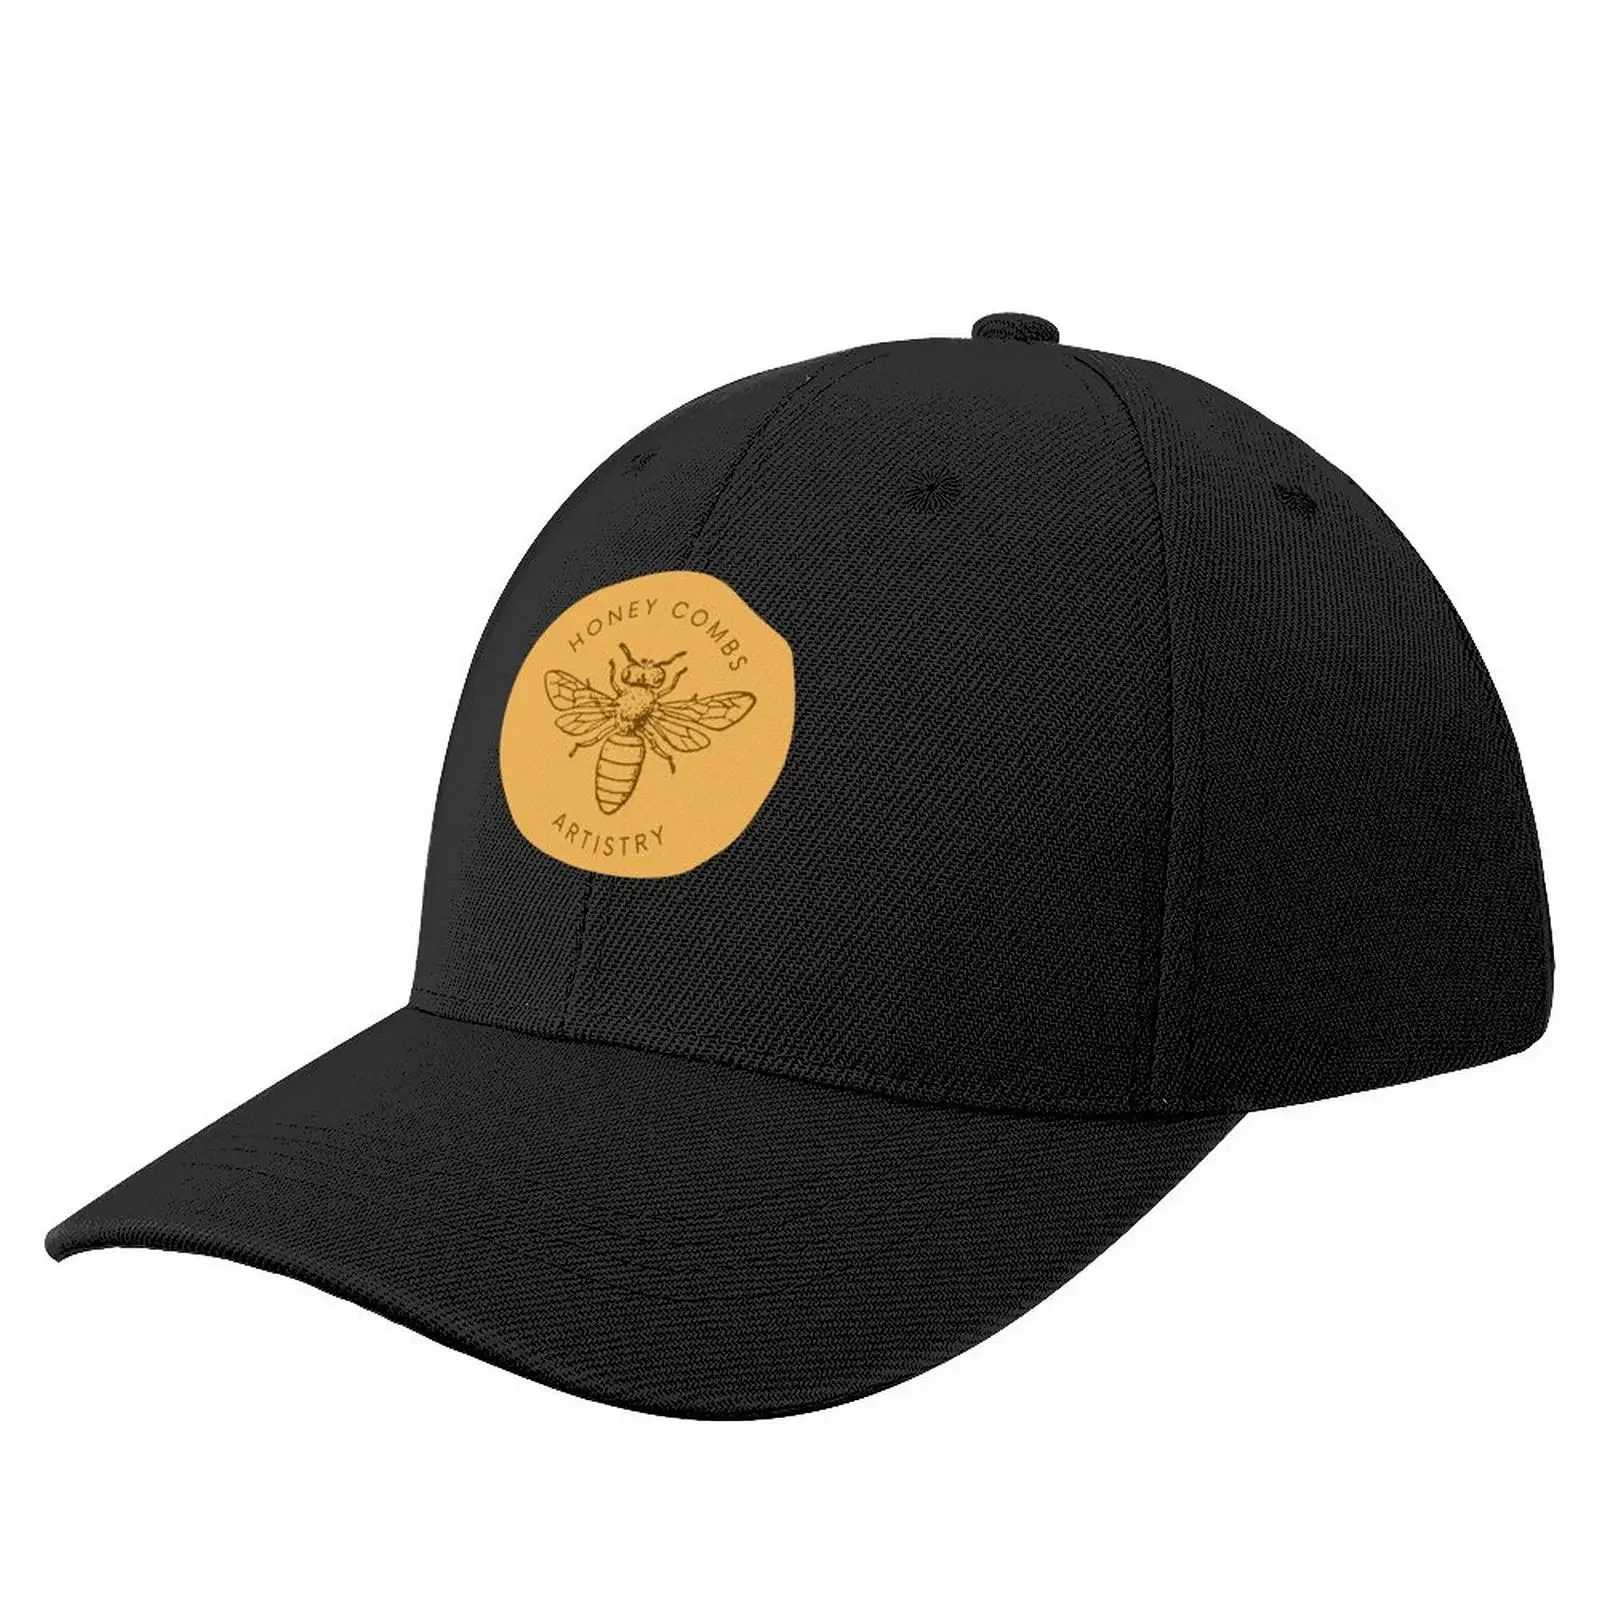 

Honey Combs ArtistryCap Baseball Cap Hat Man Luxury Sports Cap Golf Wear For Men Women's